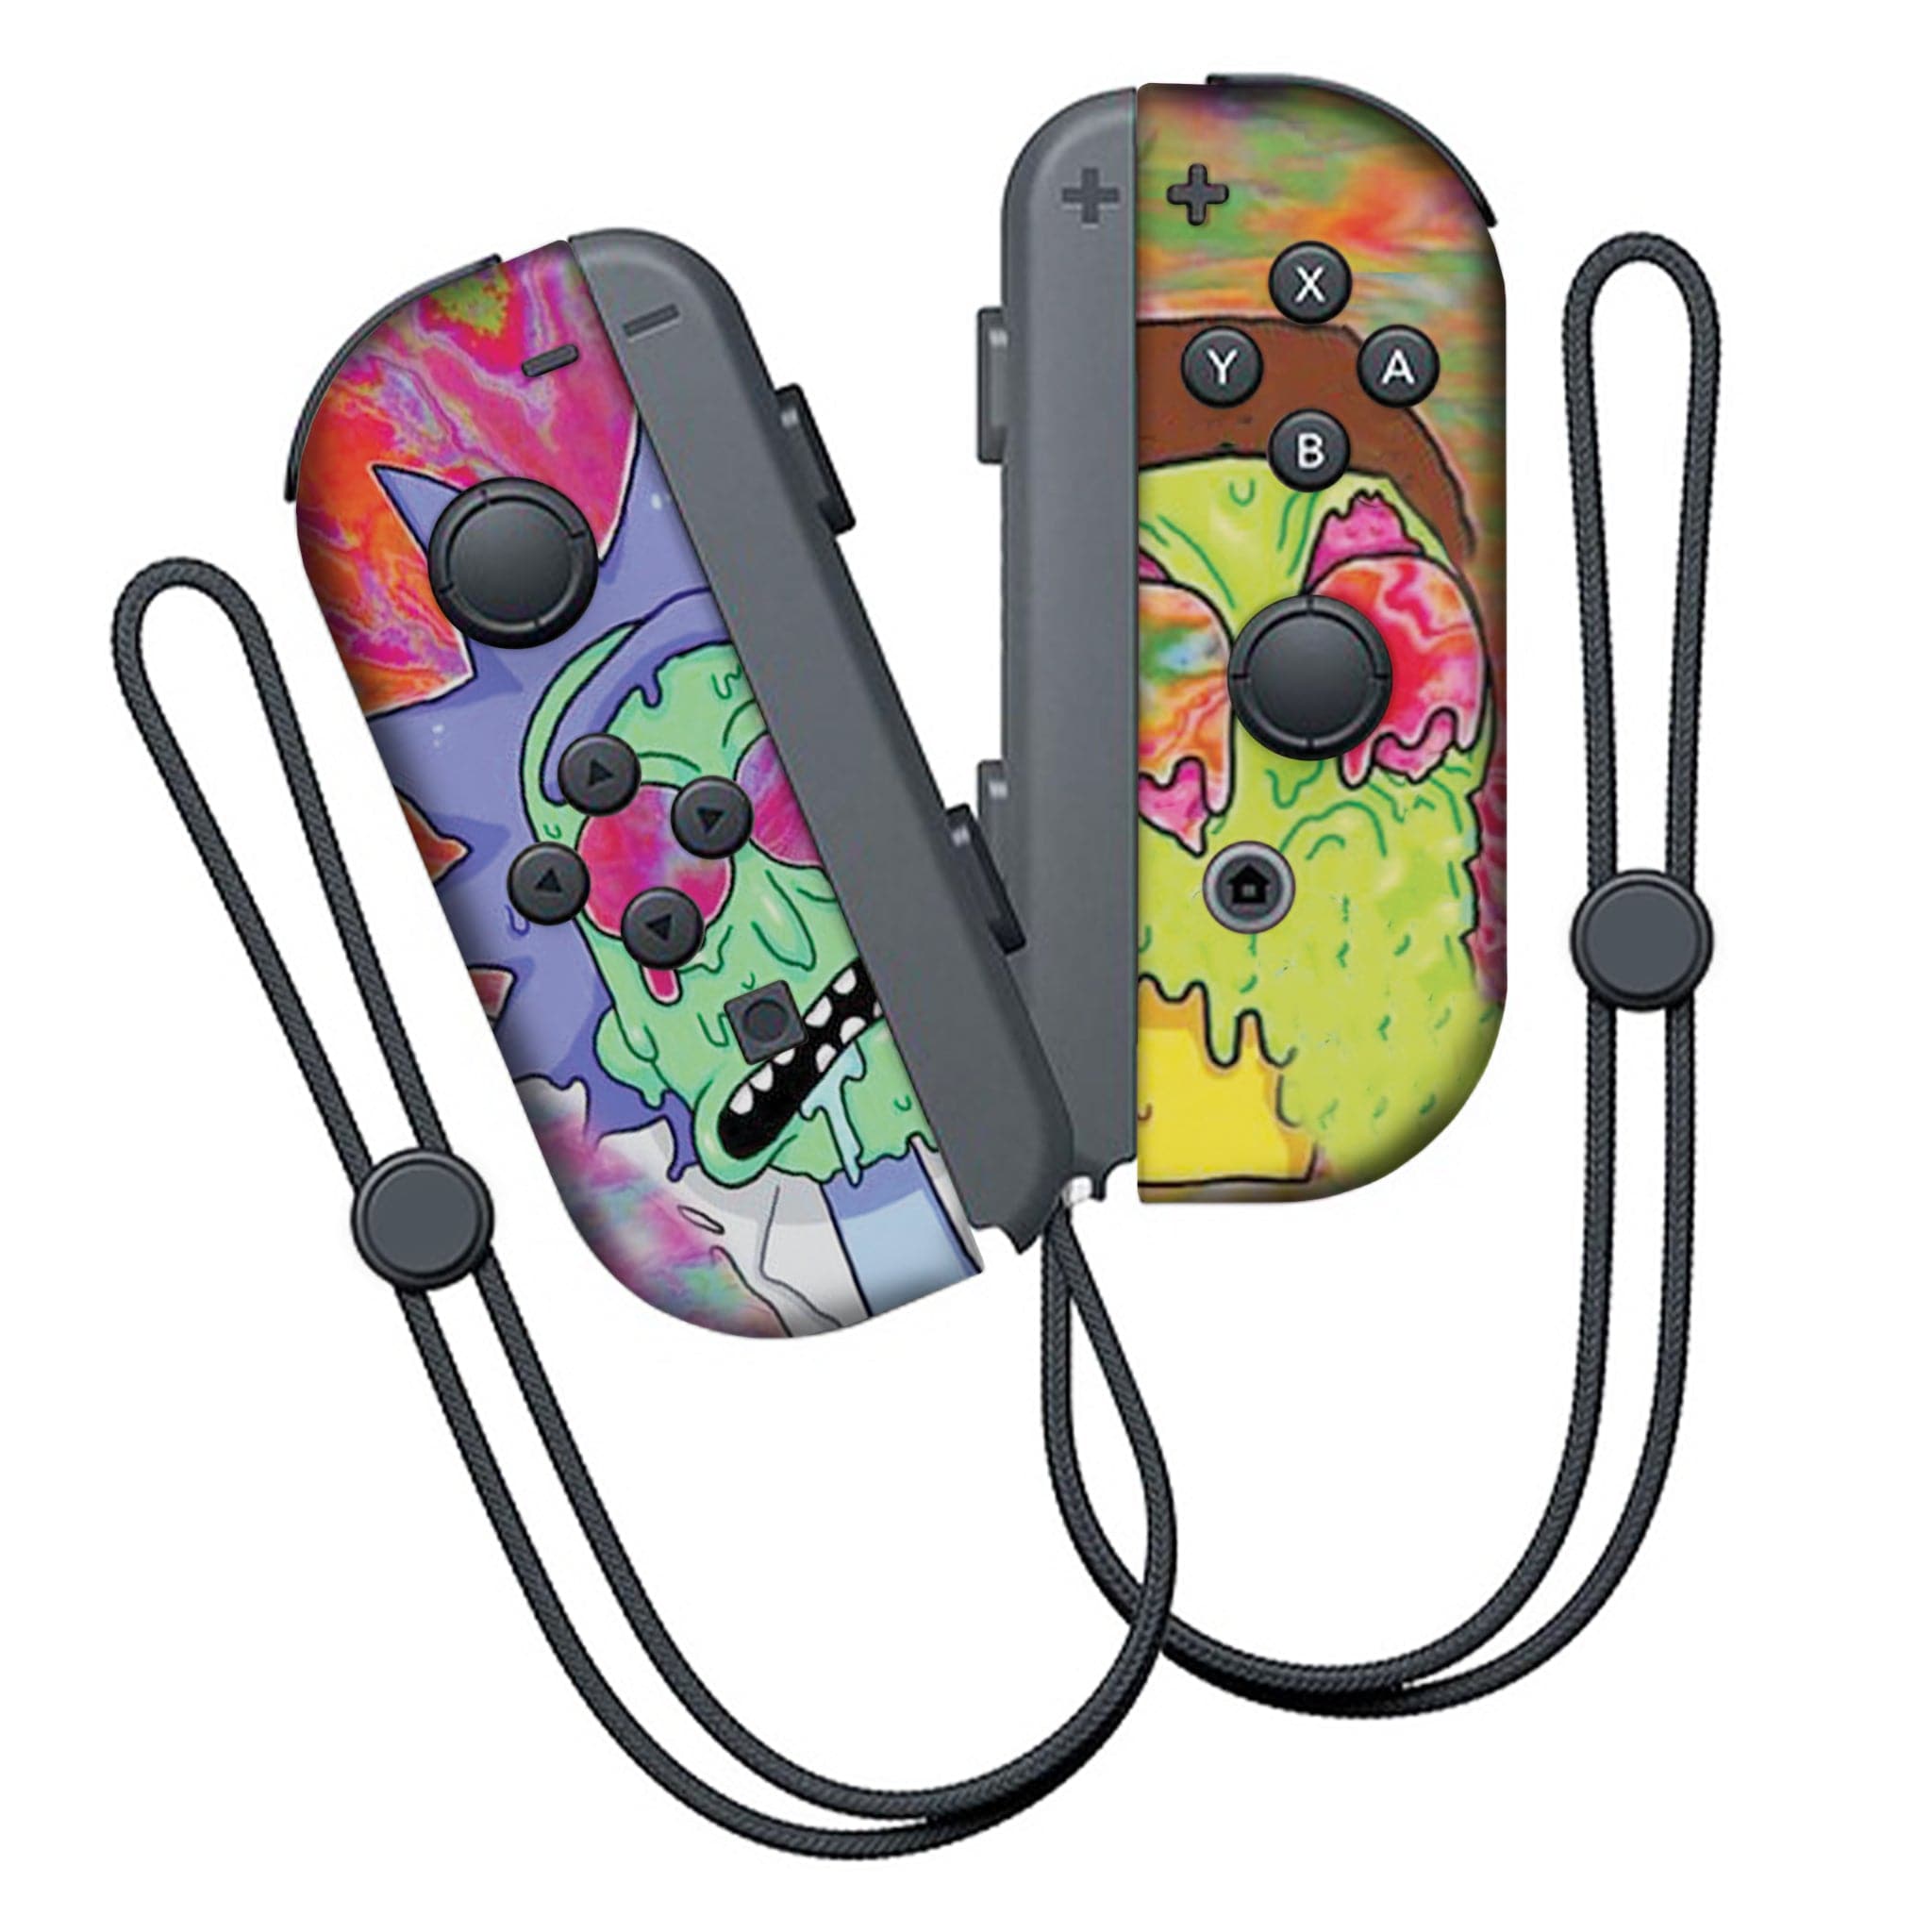 Rick & Morty Inspired Switch Joy-Con | Cheap Nintendo Switch